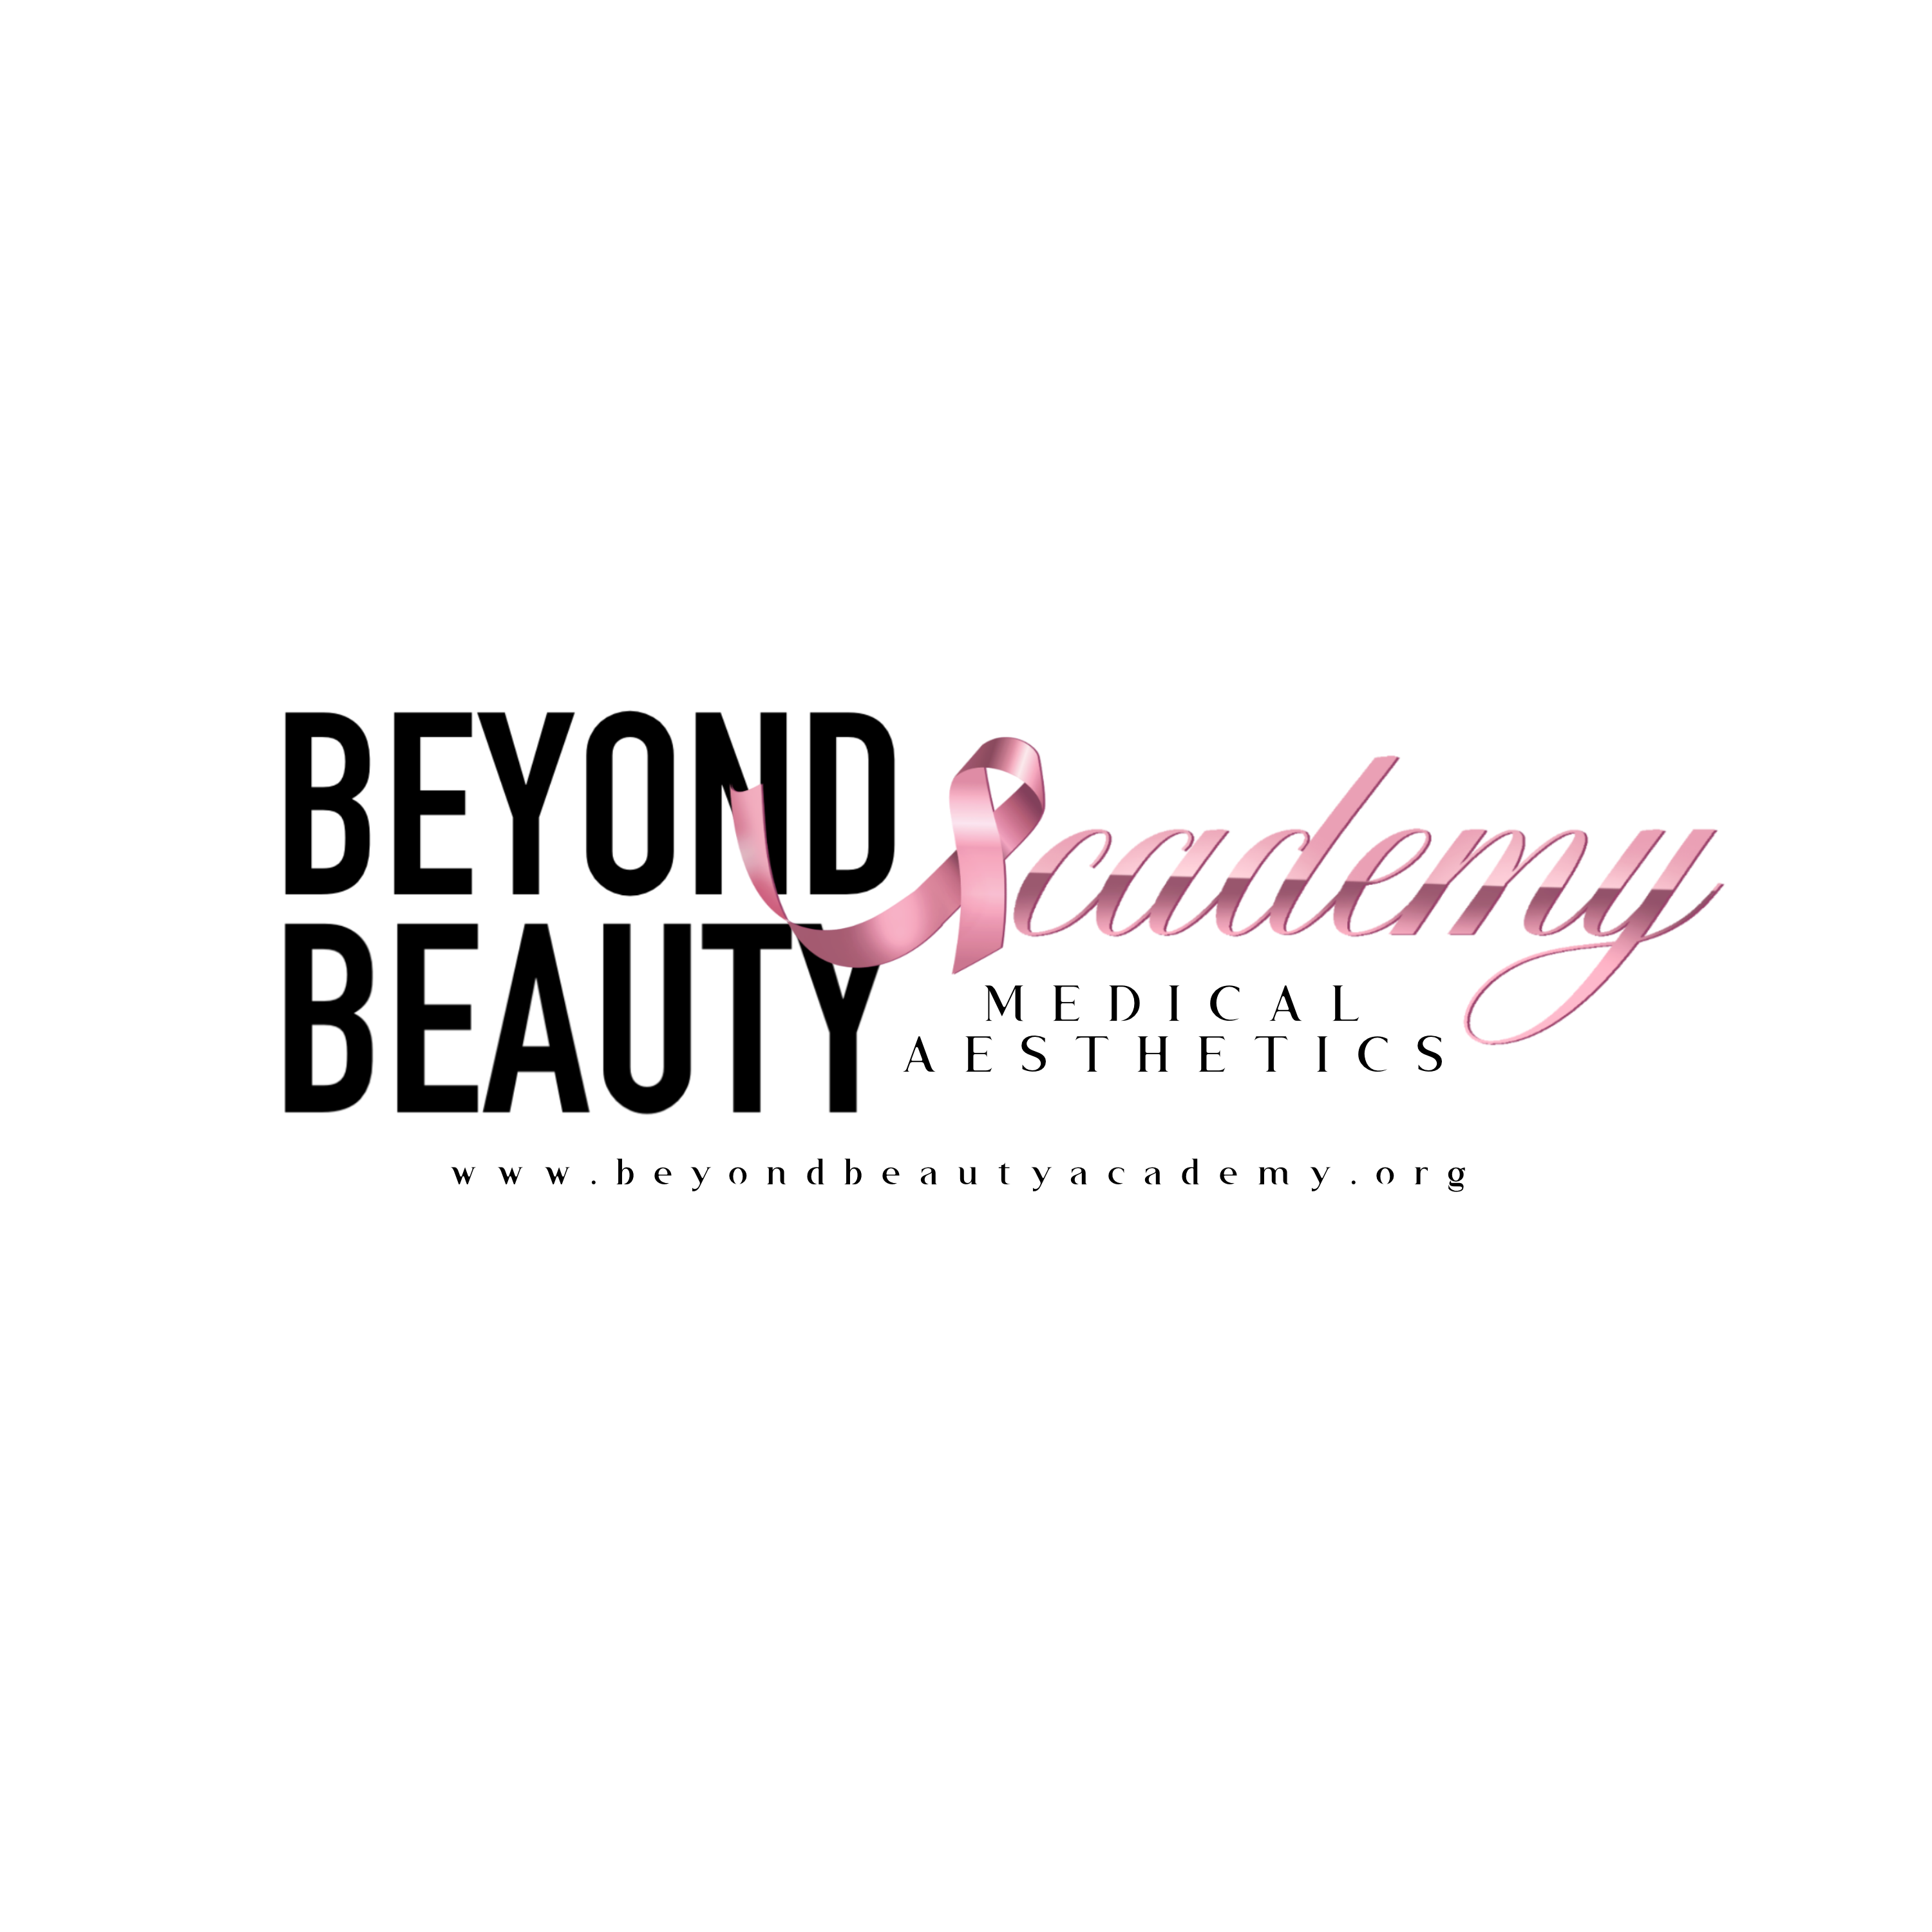 Beyond Beauty Aesthetics Academy & Aesthetic Services